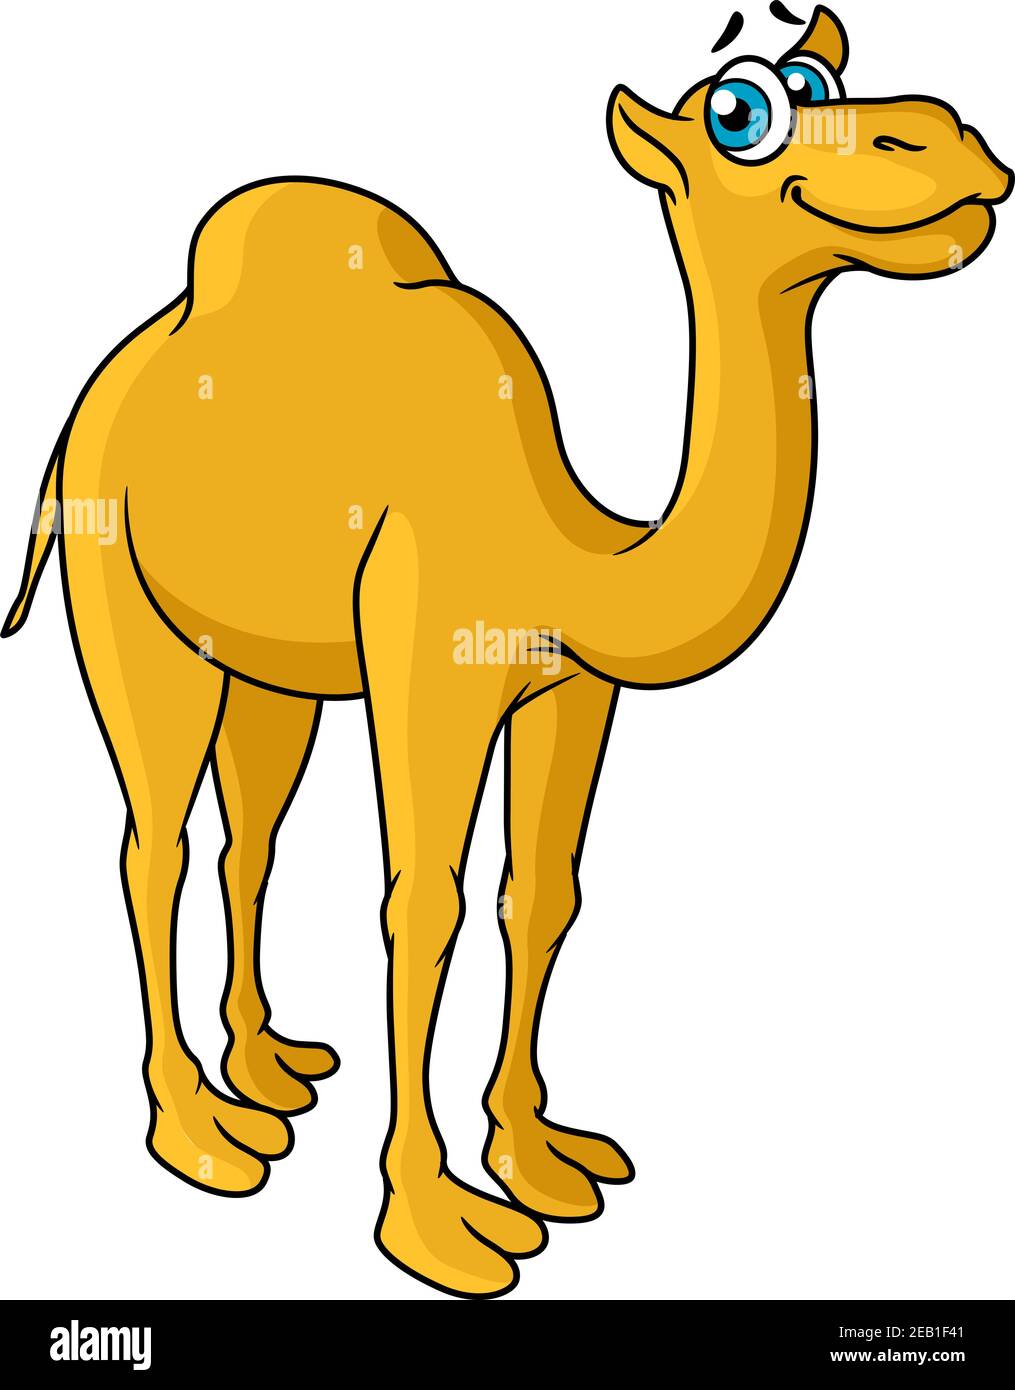 Cartoon camel hi-res stock photography and images - Alamy